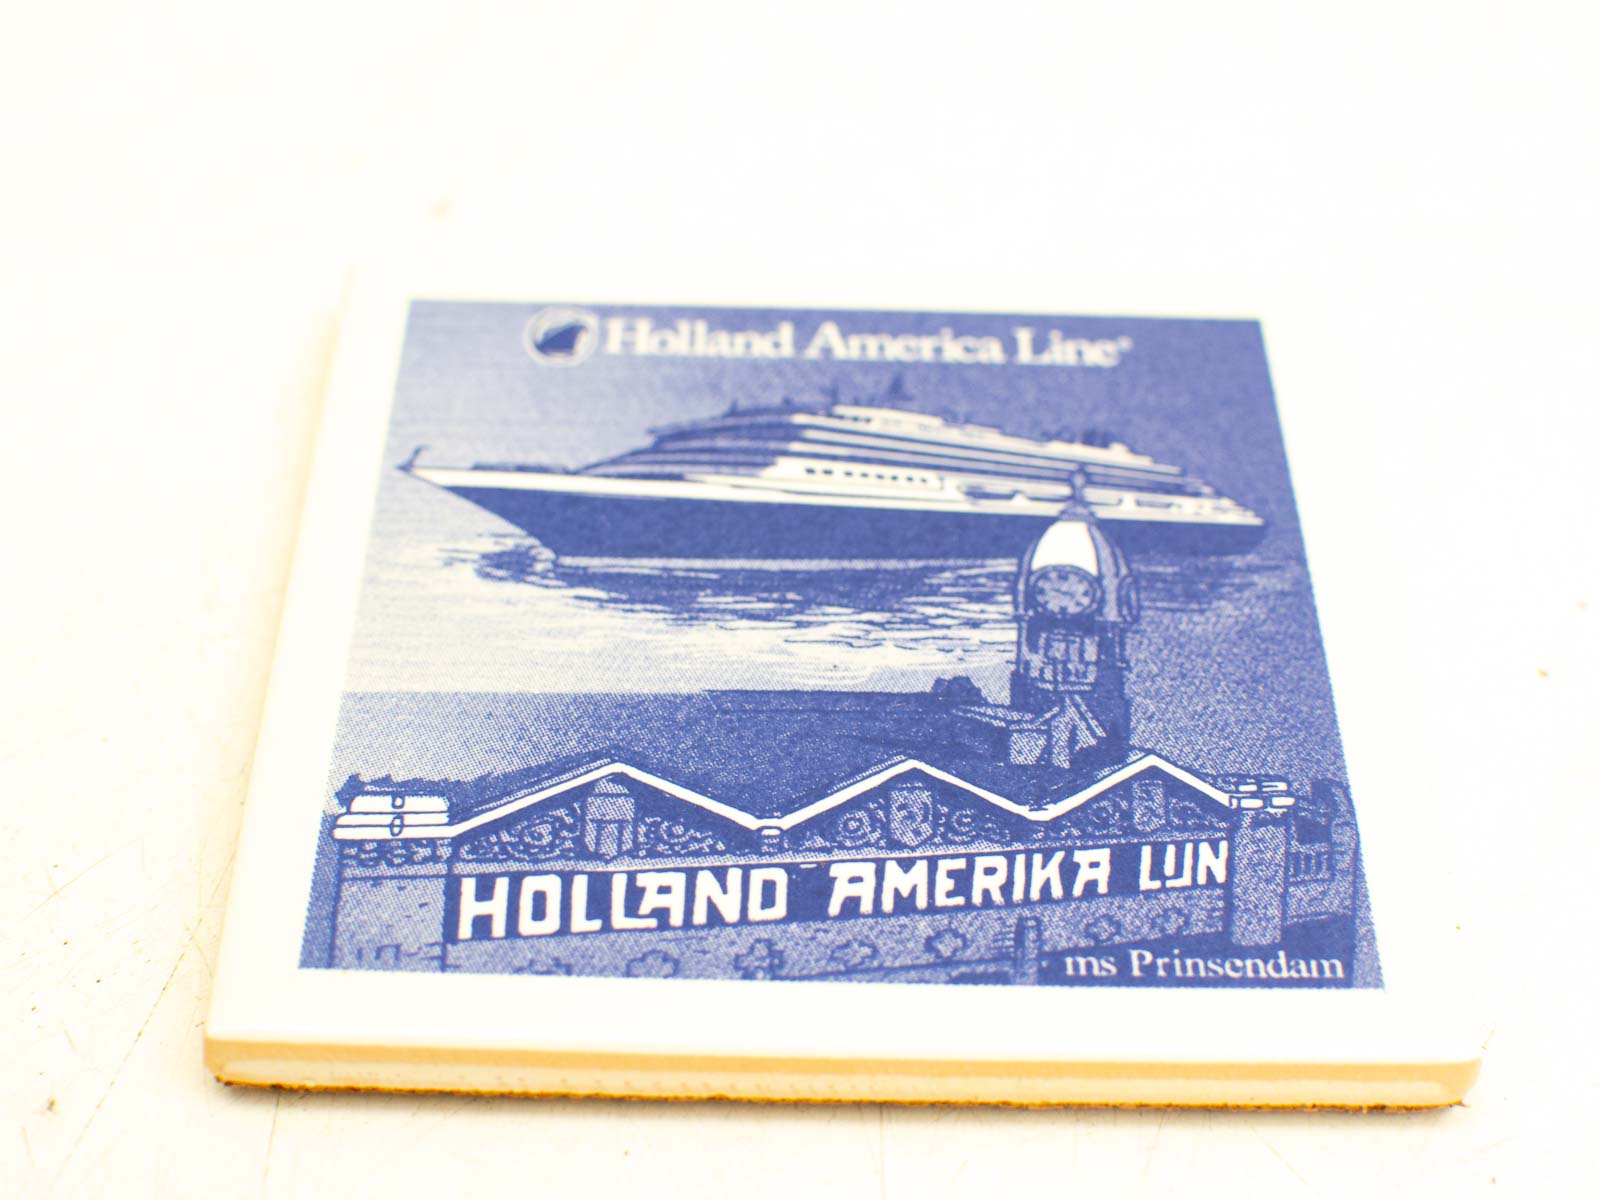 2  Holland america line tegeltje  31663